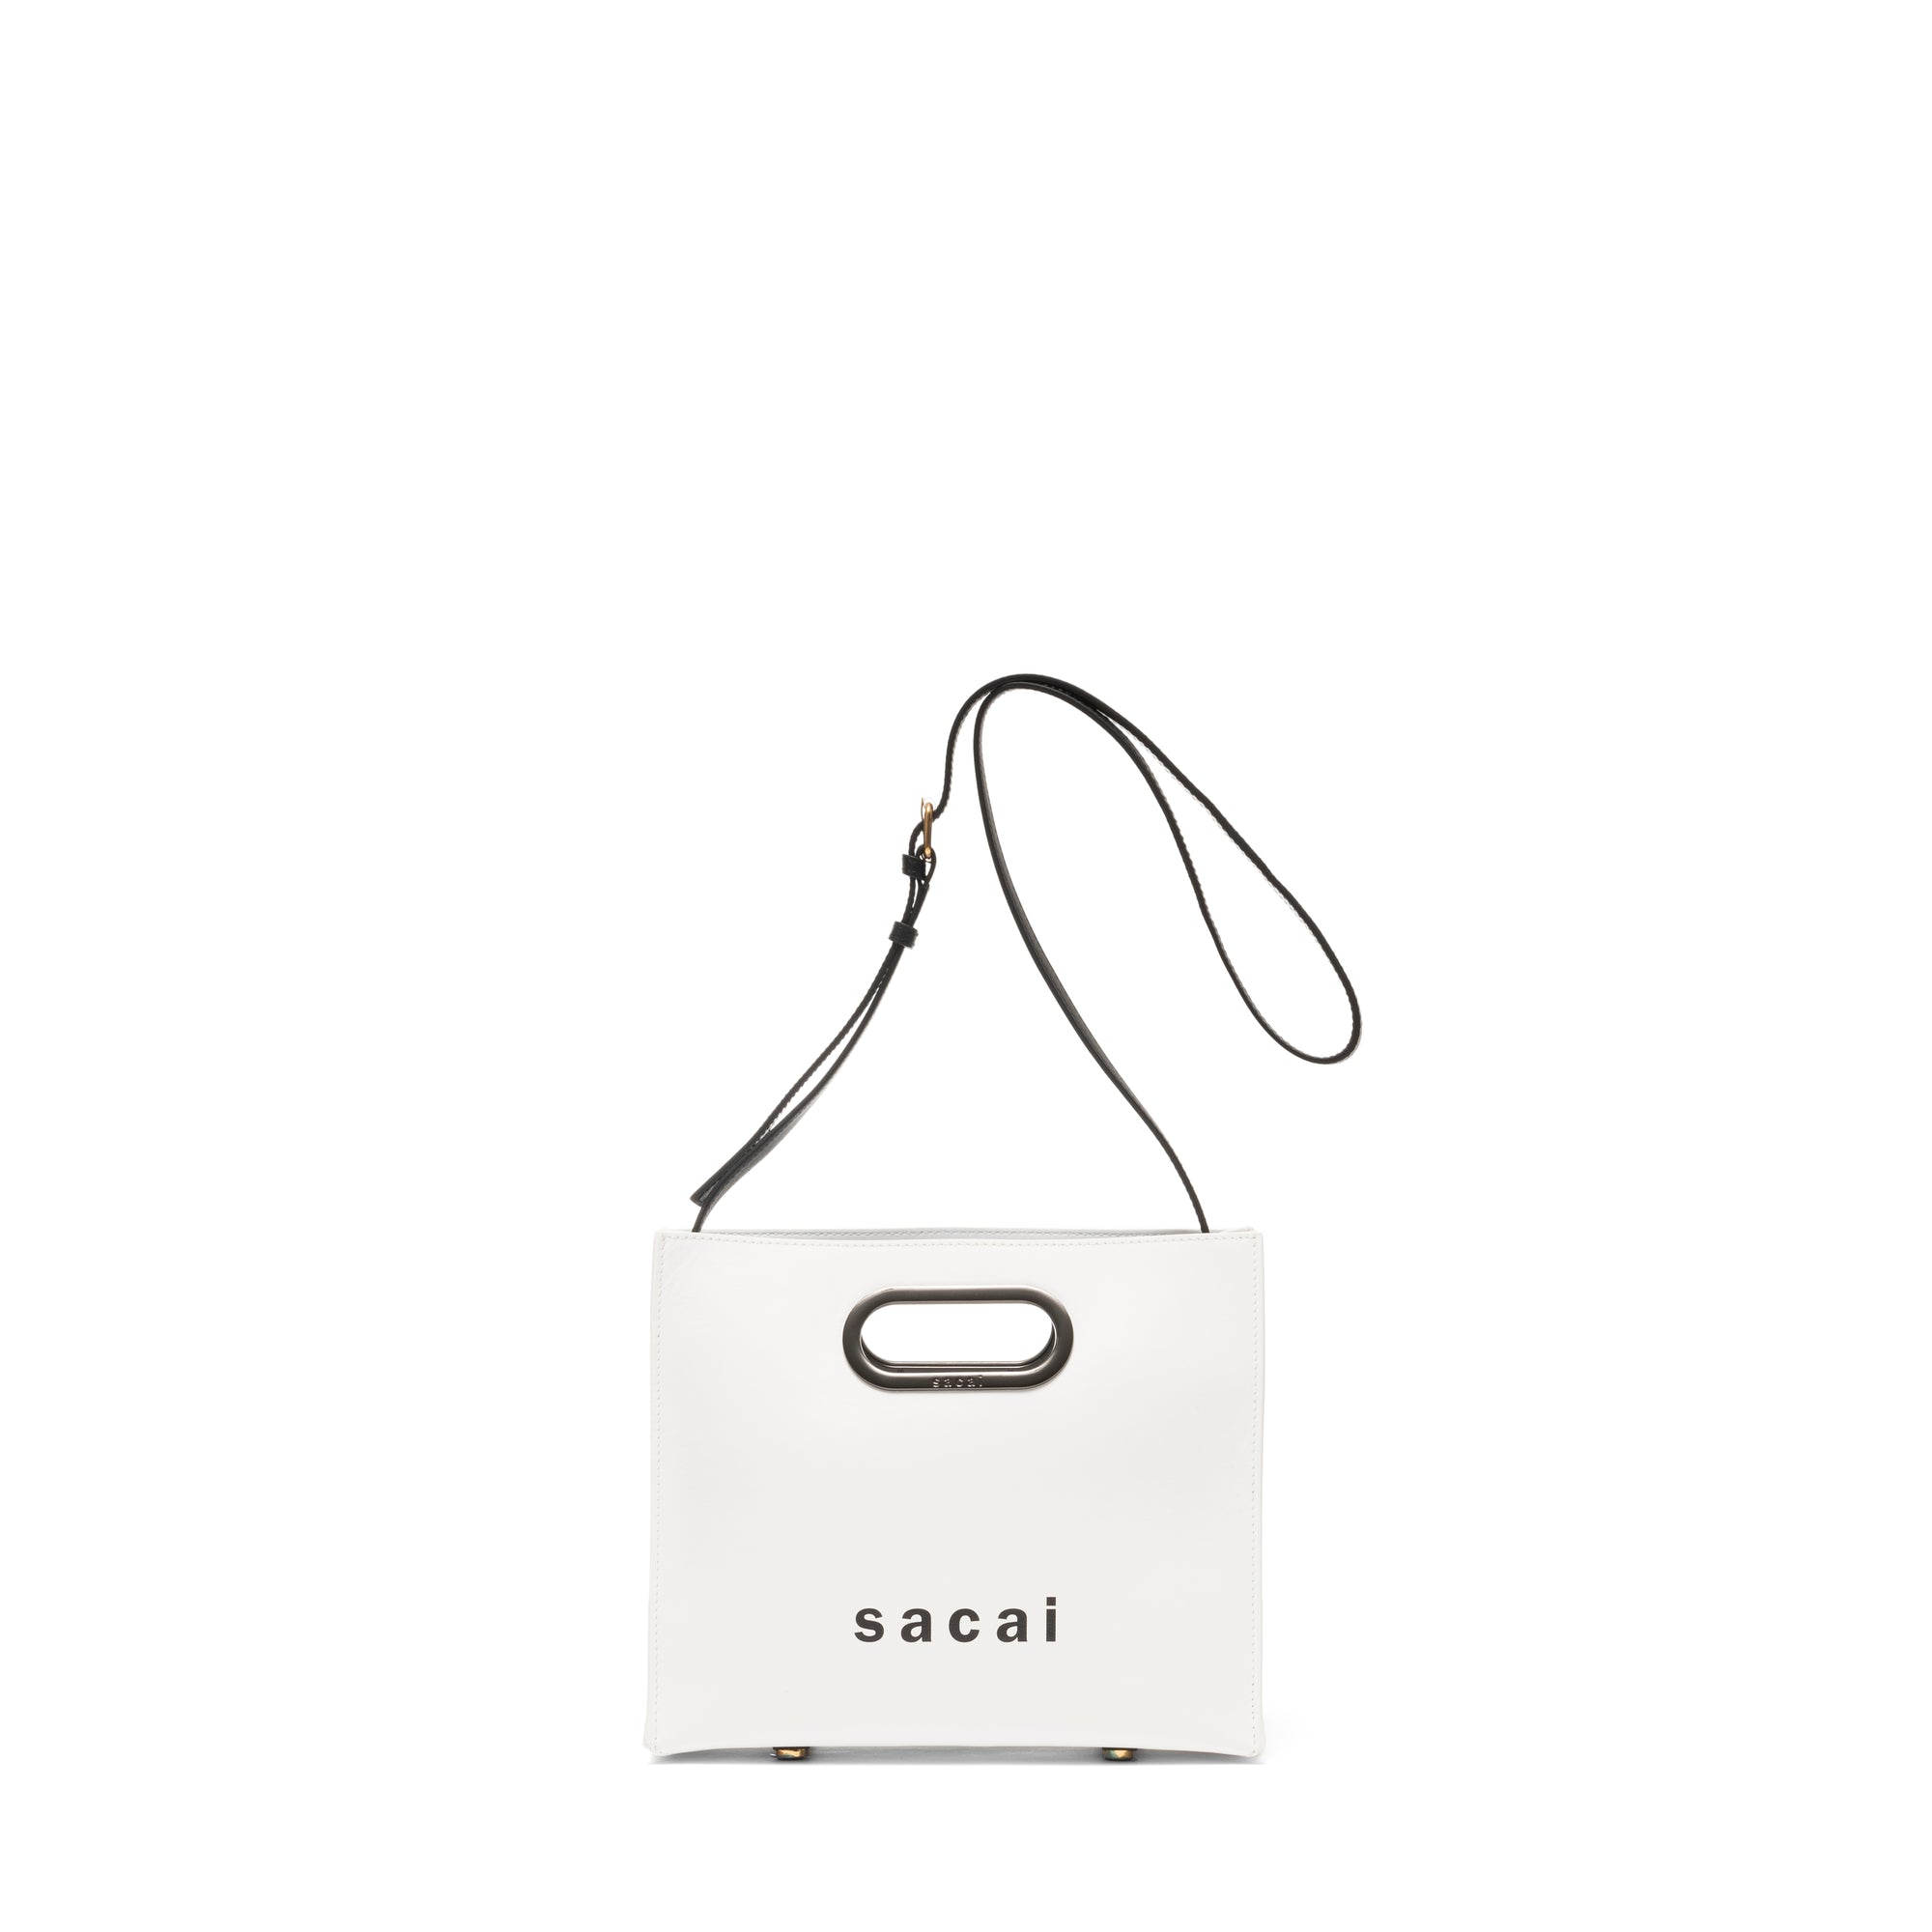 SACAI - WOMENS PRE NEW SHOPPER BAG SMALL - (WHITE) view 3